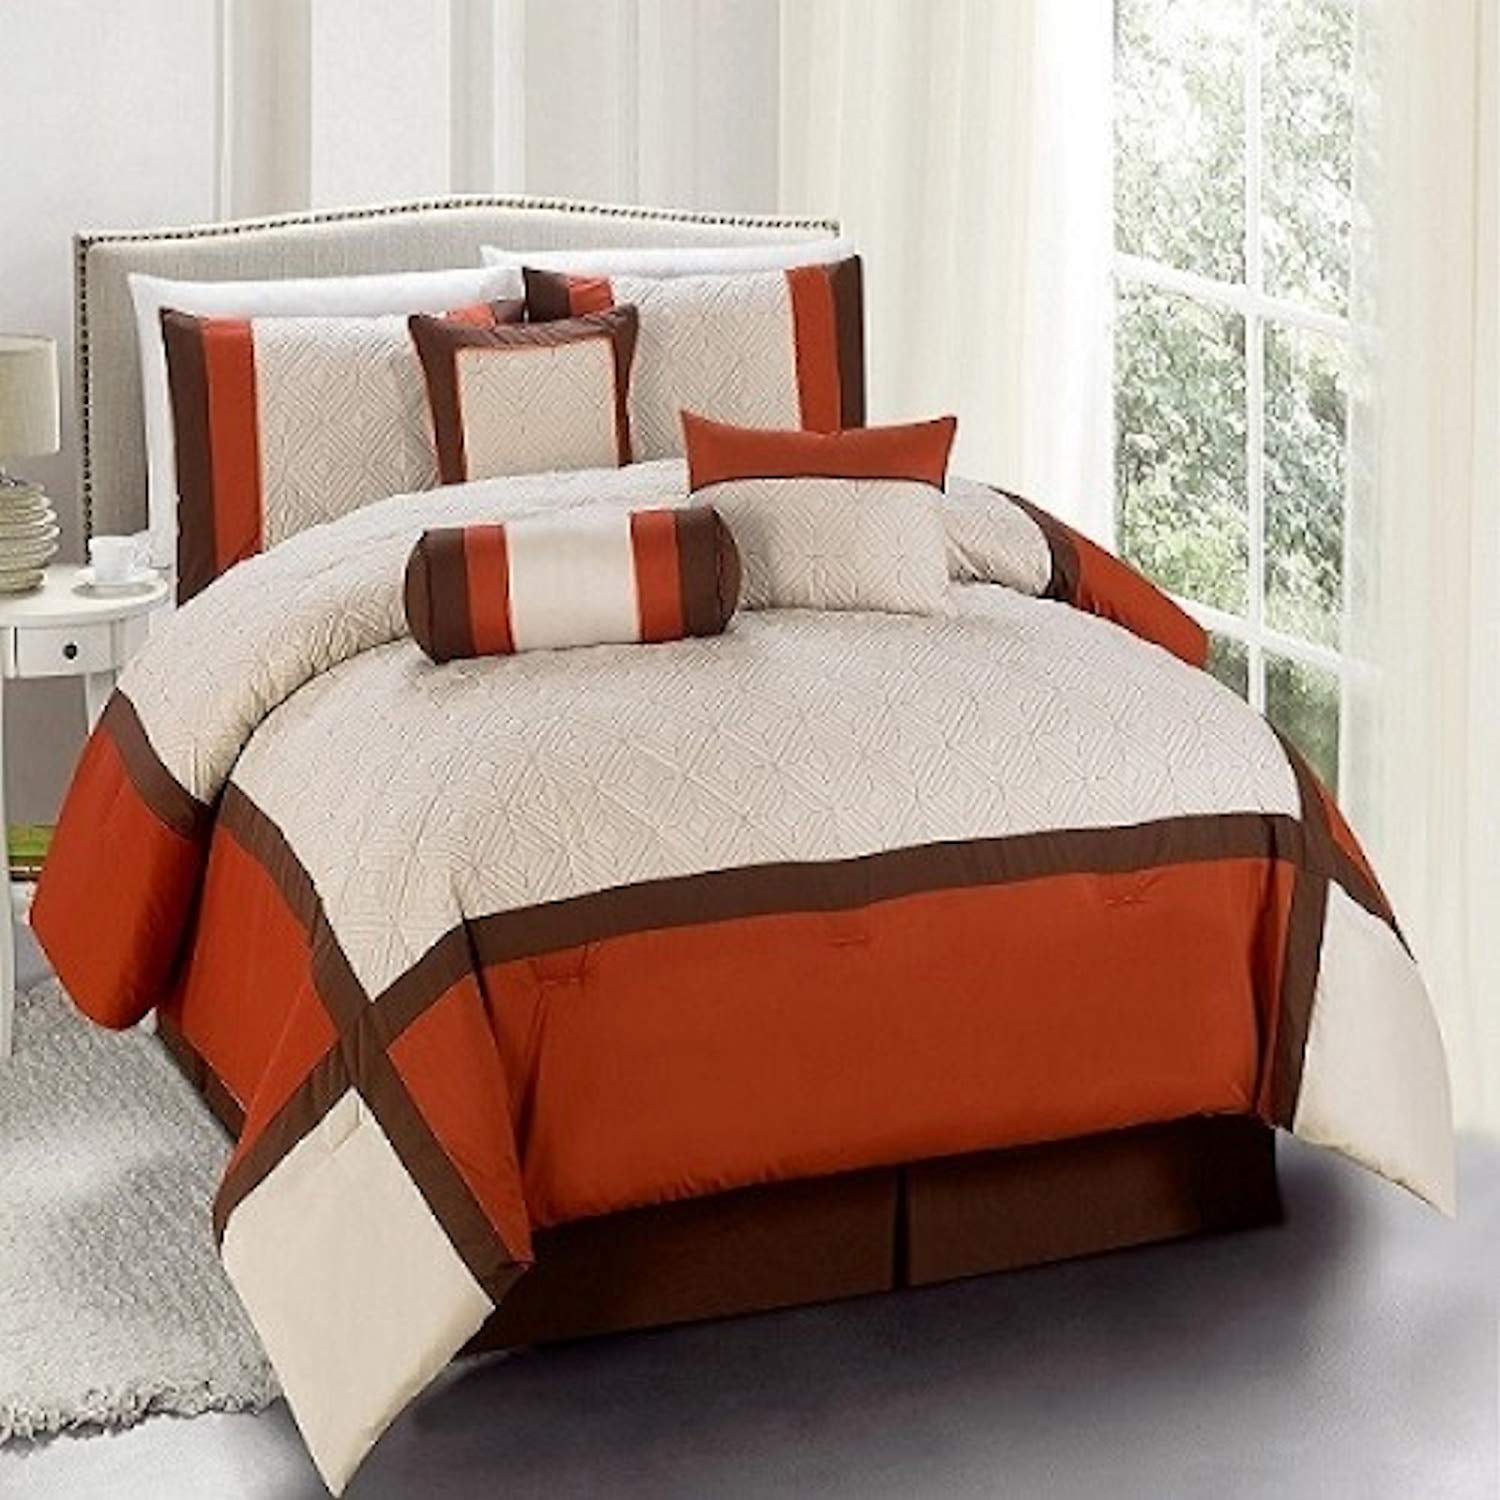 Beige Brown Orange Embroidered Floral 7 pc Comforter Set Full Queen Cal King Bed 